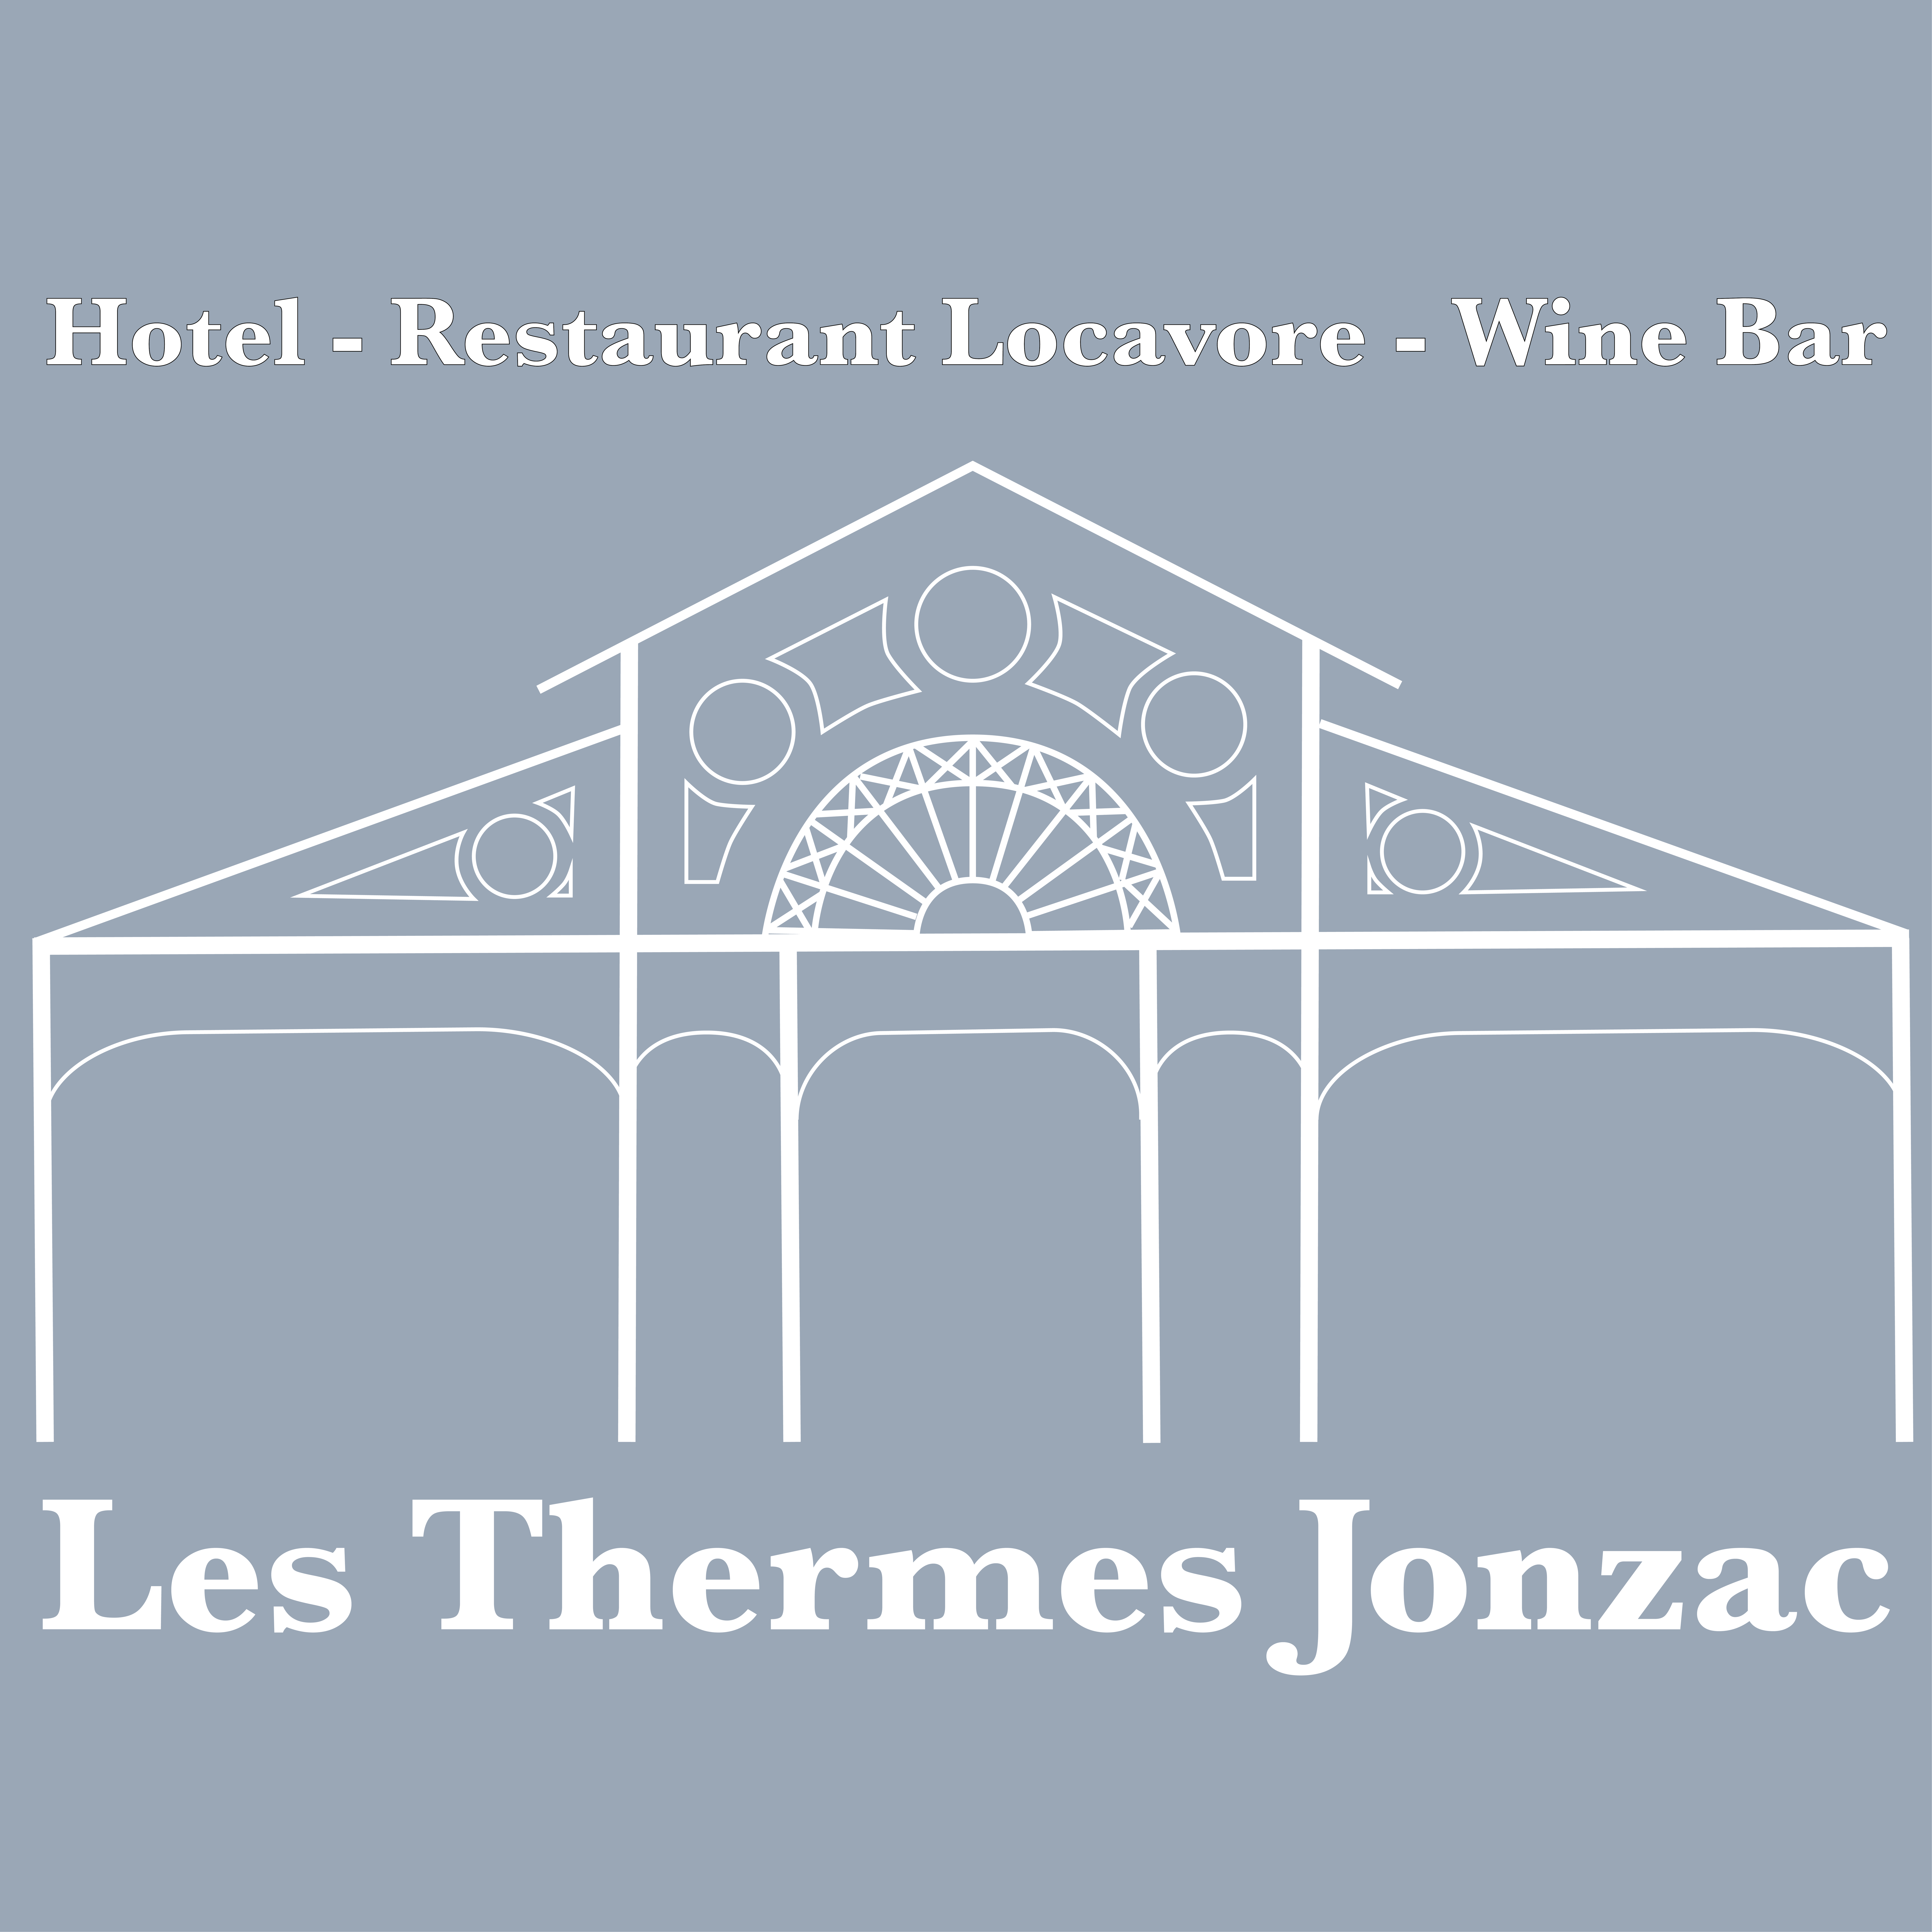 Les Thermes de Jonzac – Hotel Restaurant